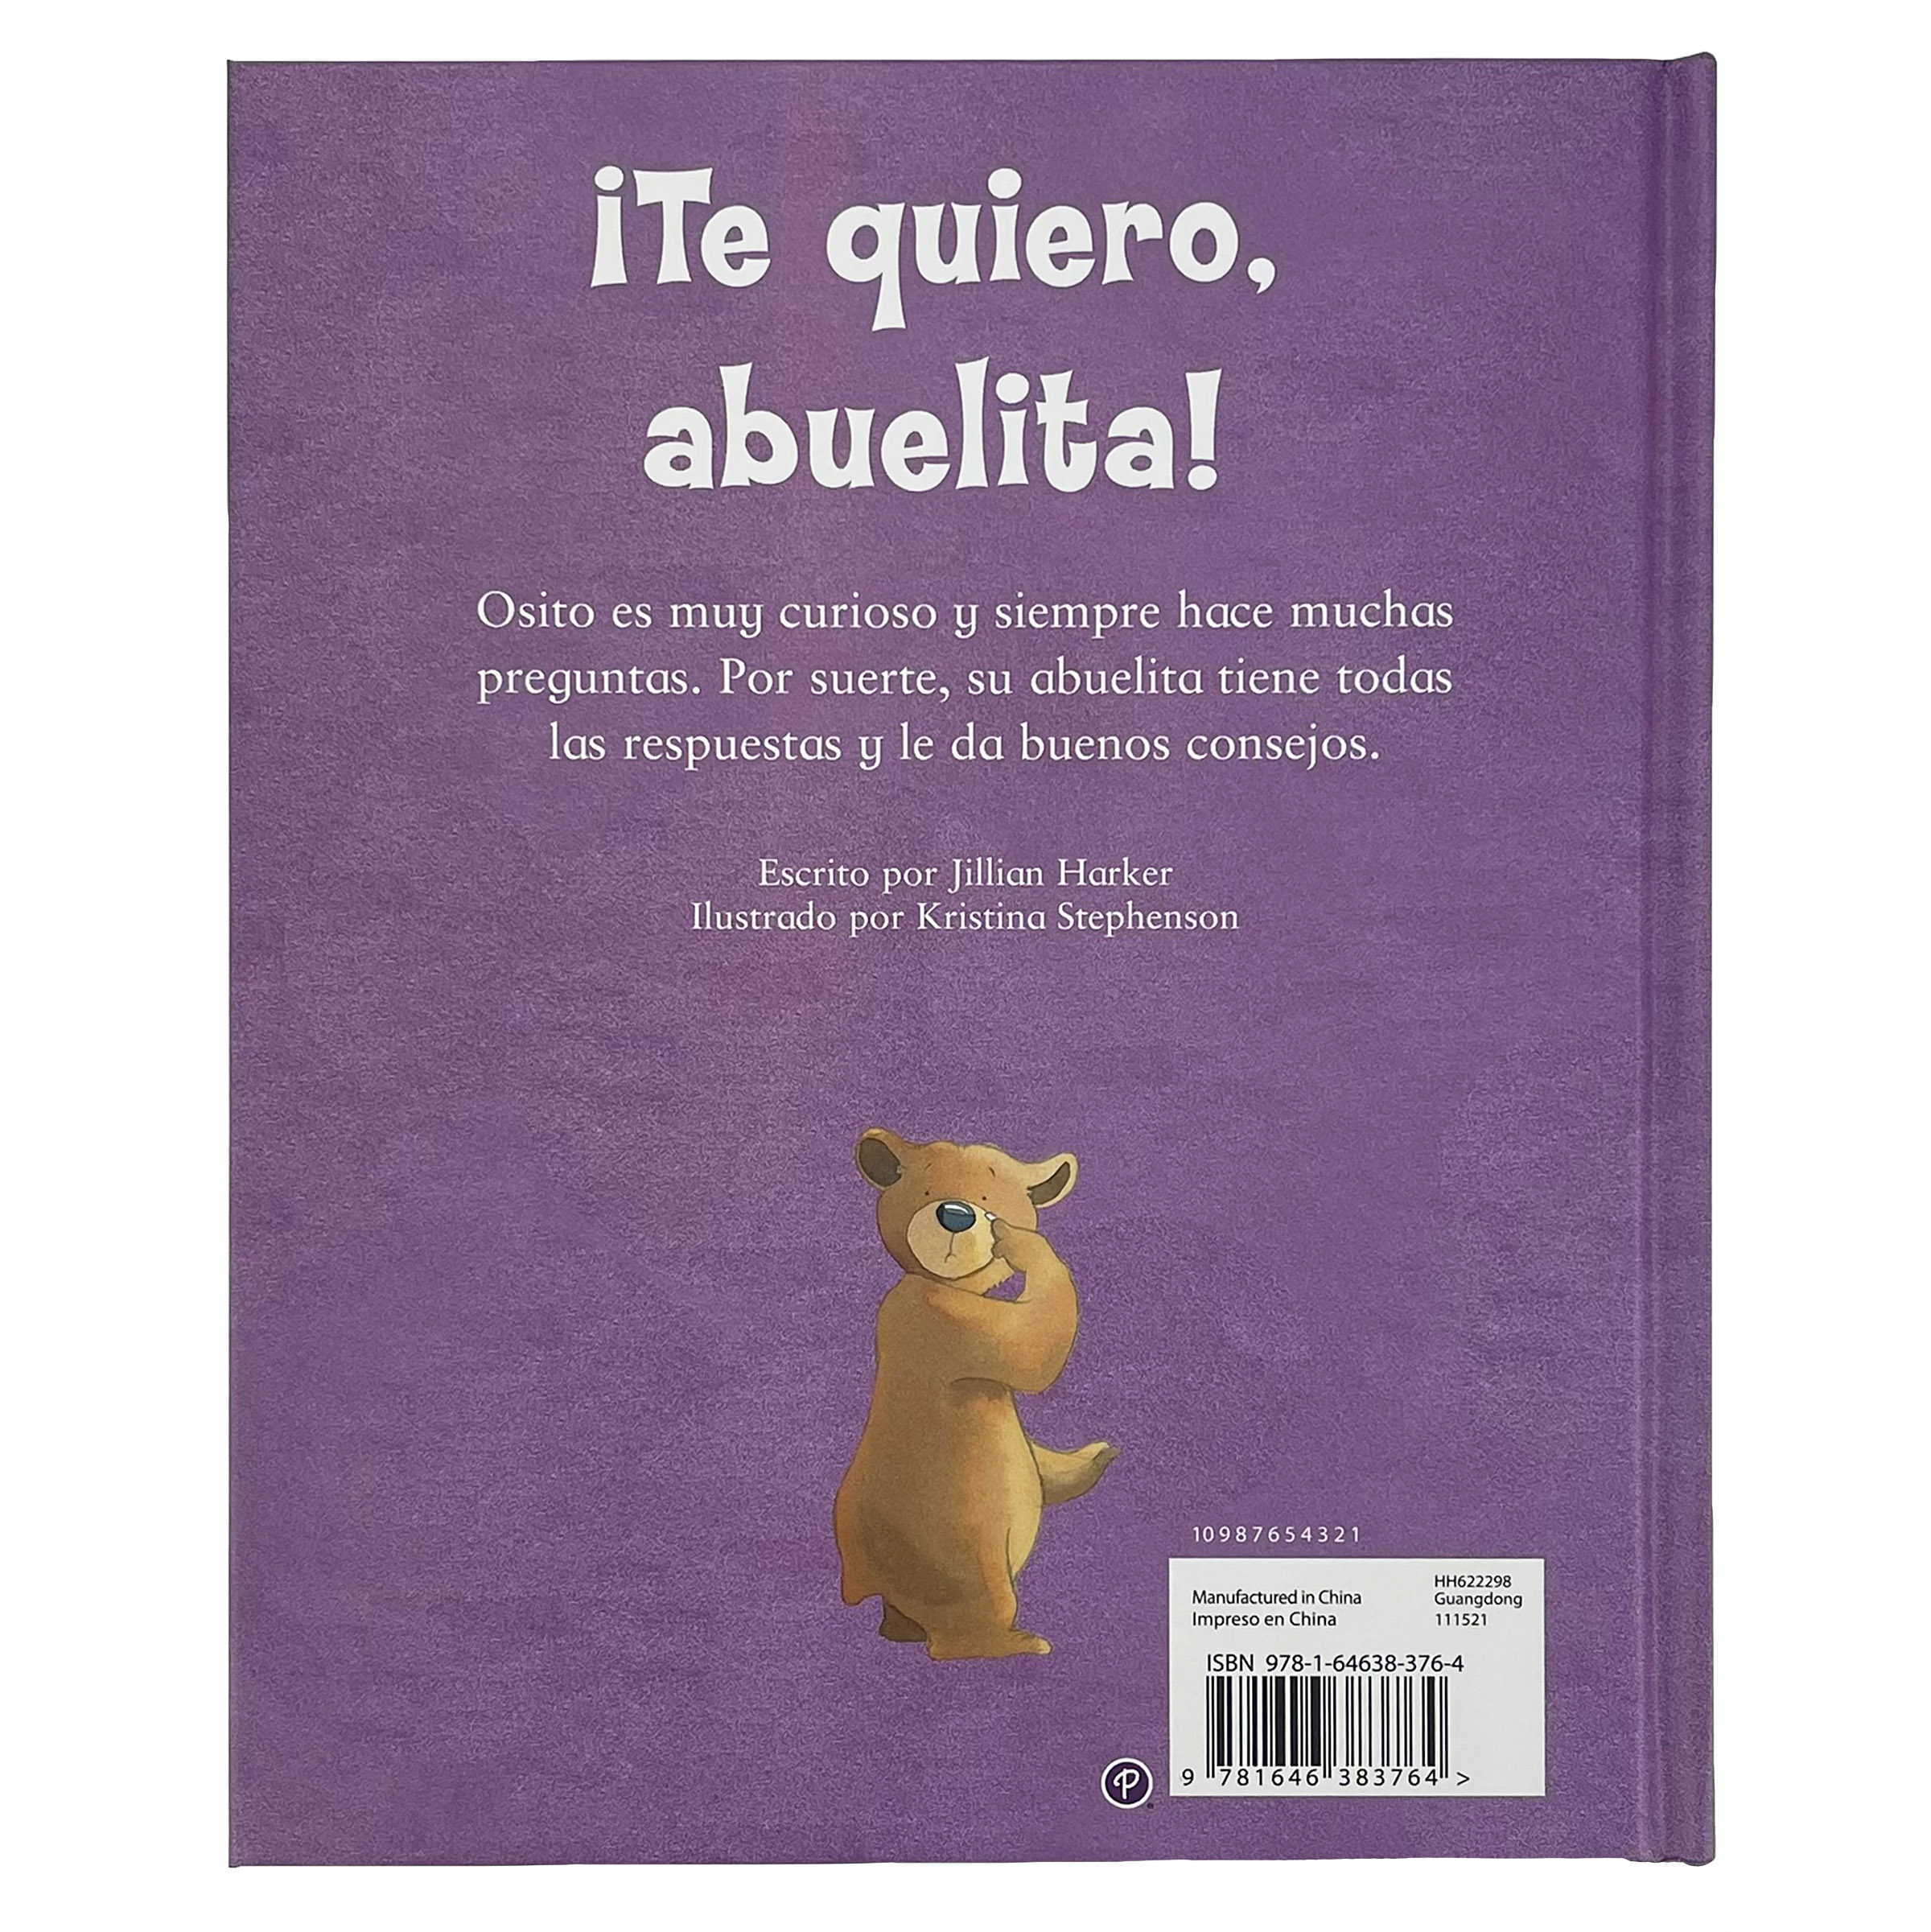 Te quiero, abuelita! I Love You, Grandma! (Spanish Edition)